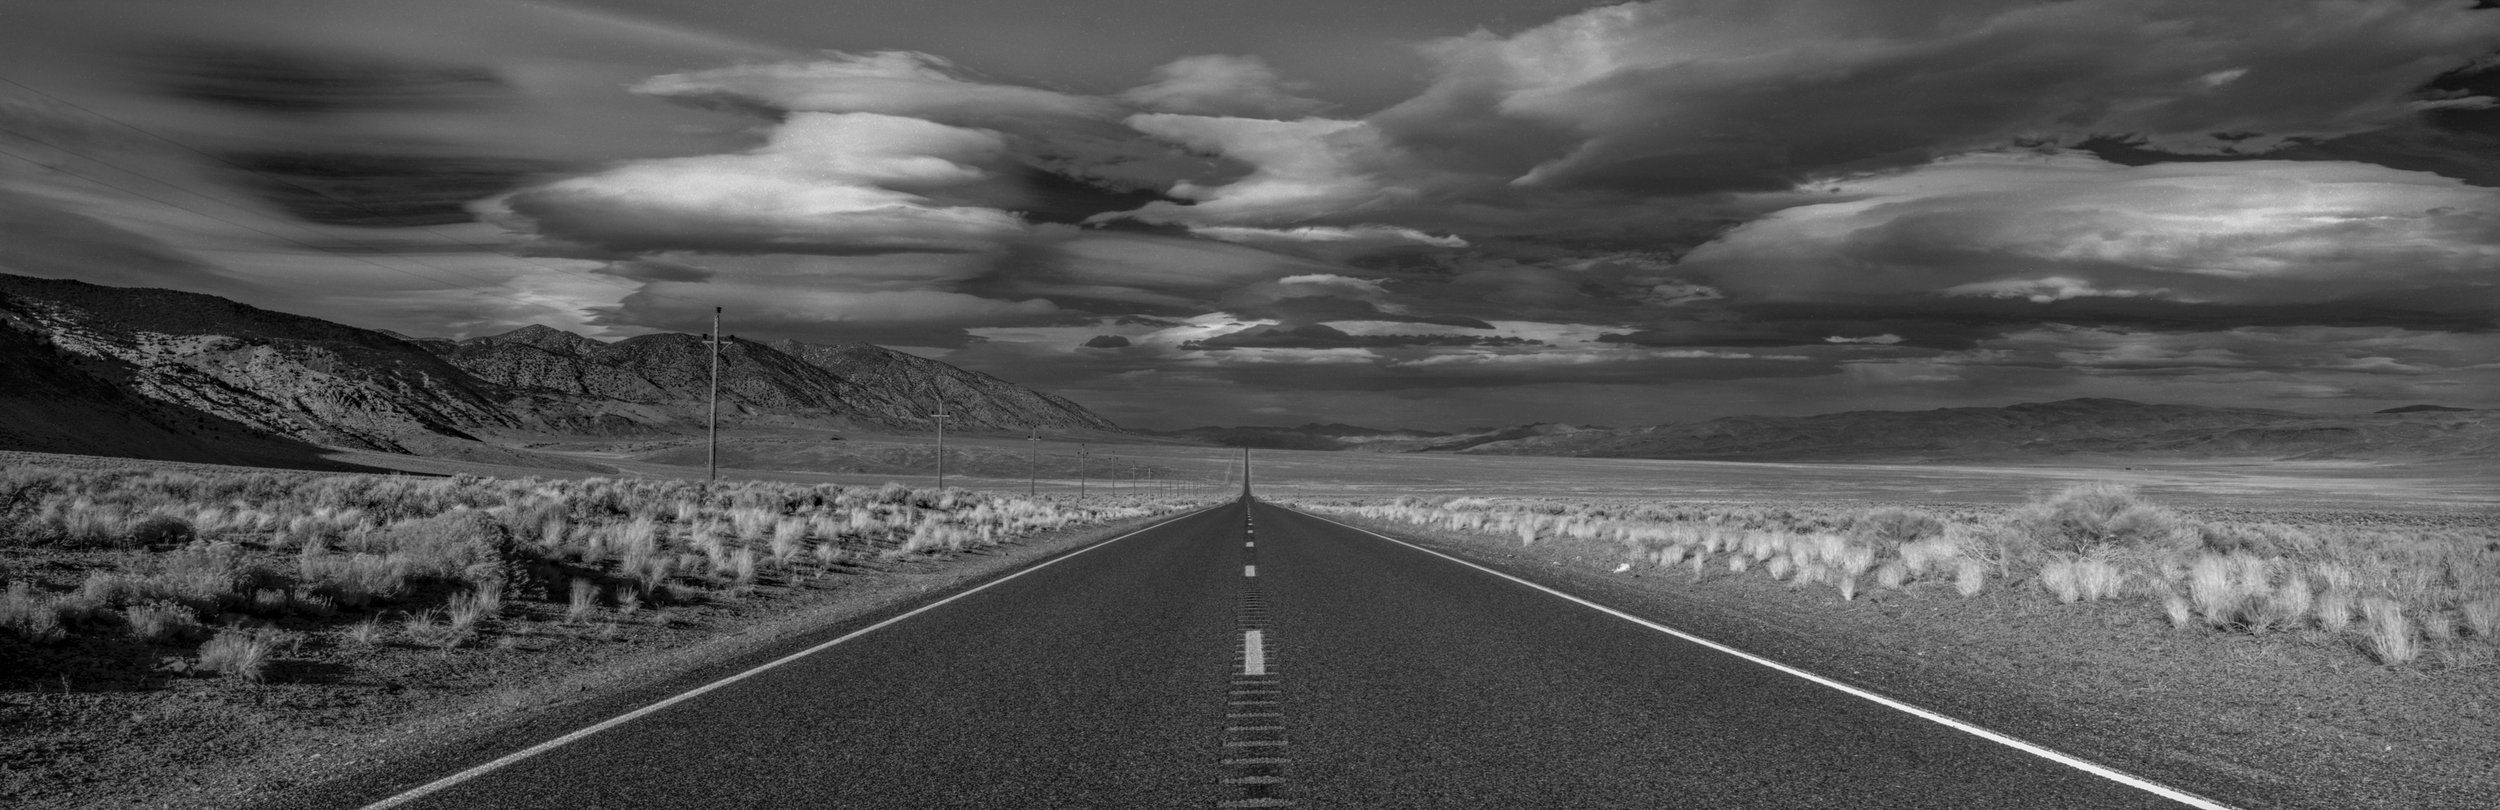   Highway 359. Nevada. November 18, 2010  